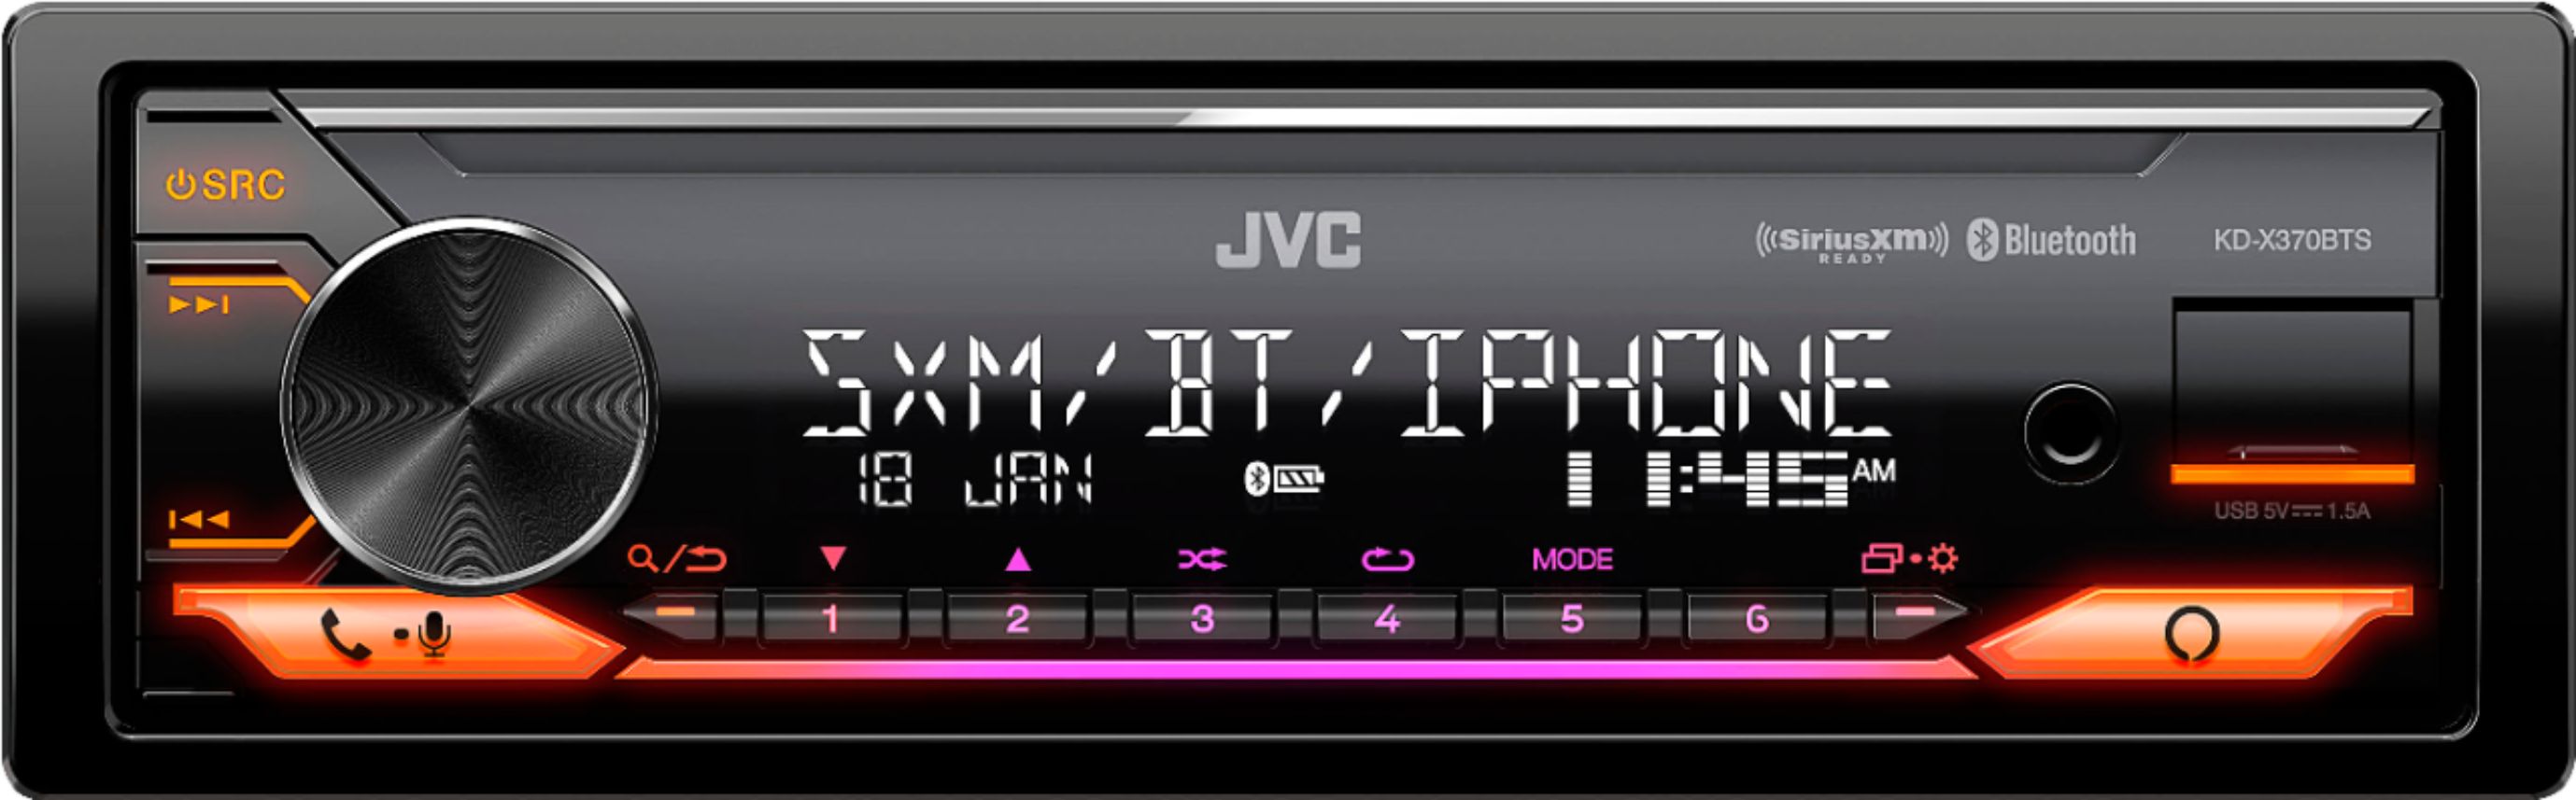 JVC - In-Dash Digital Media Receiver - Built-in Bluetooth - Satellite Radio-ready with Detachable Faceplate - Black